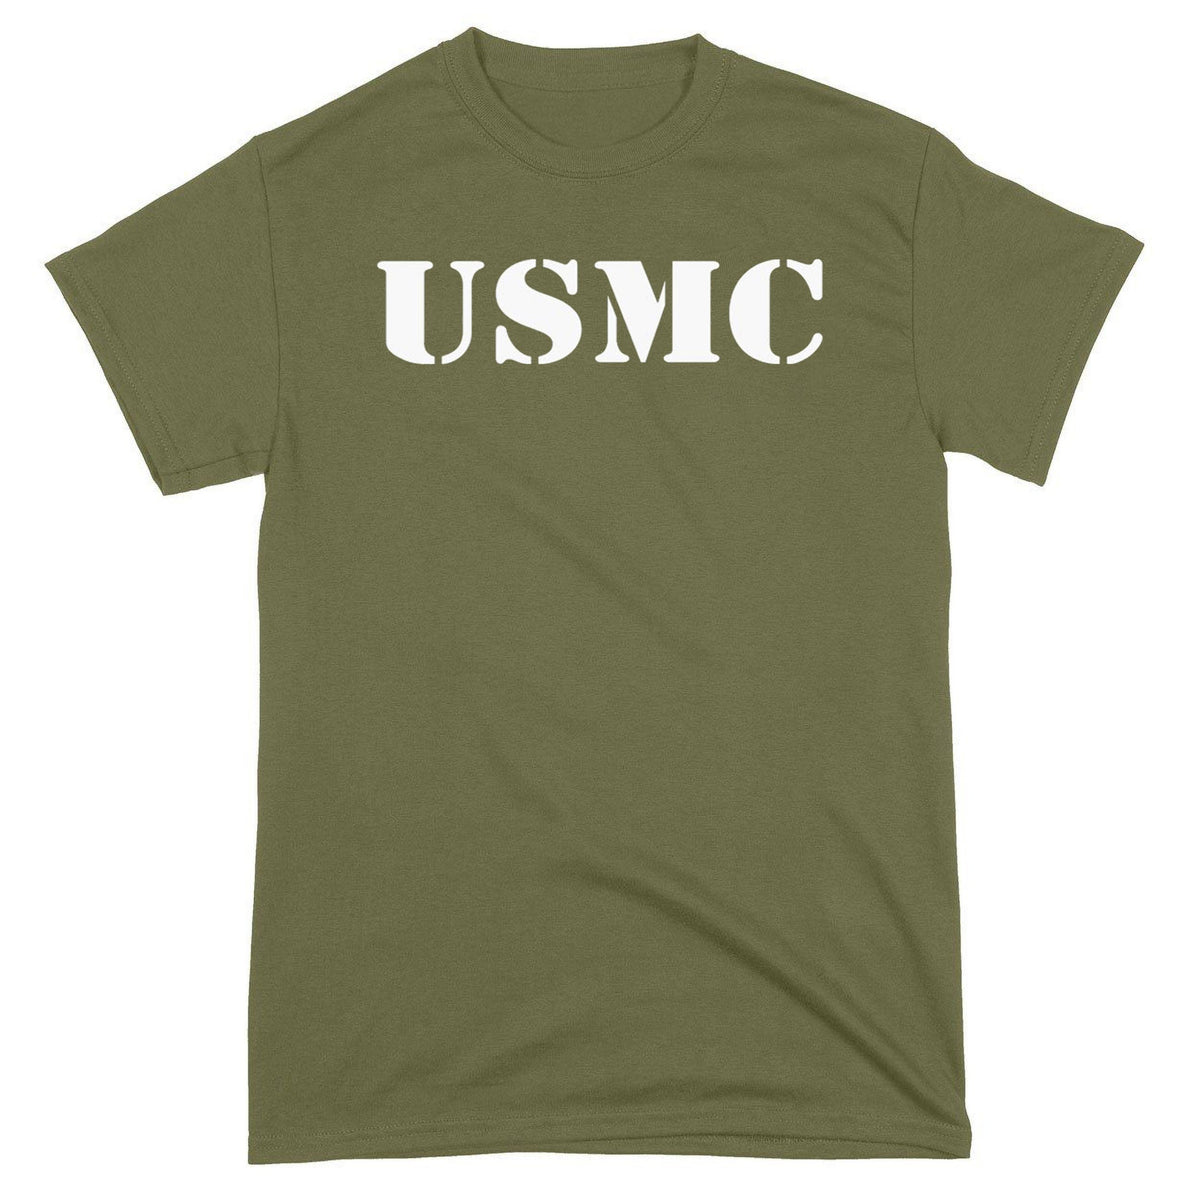 Closeout White USMC OD Green